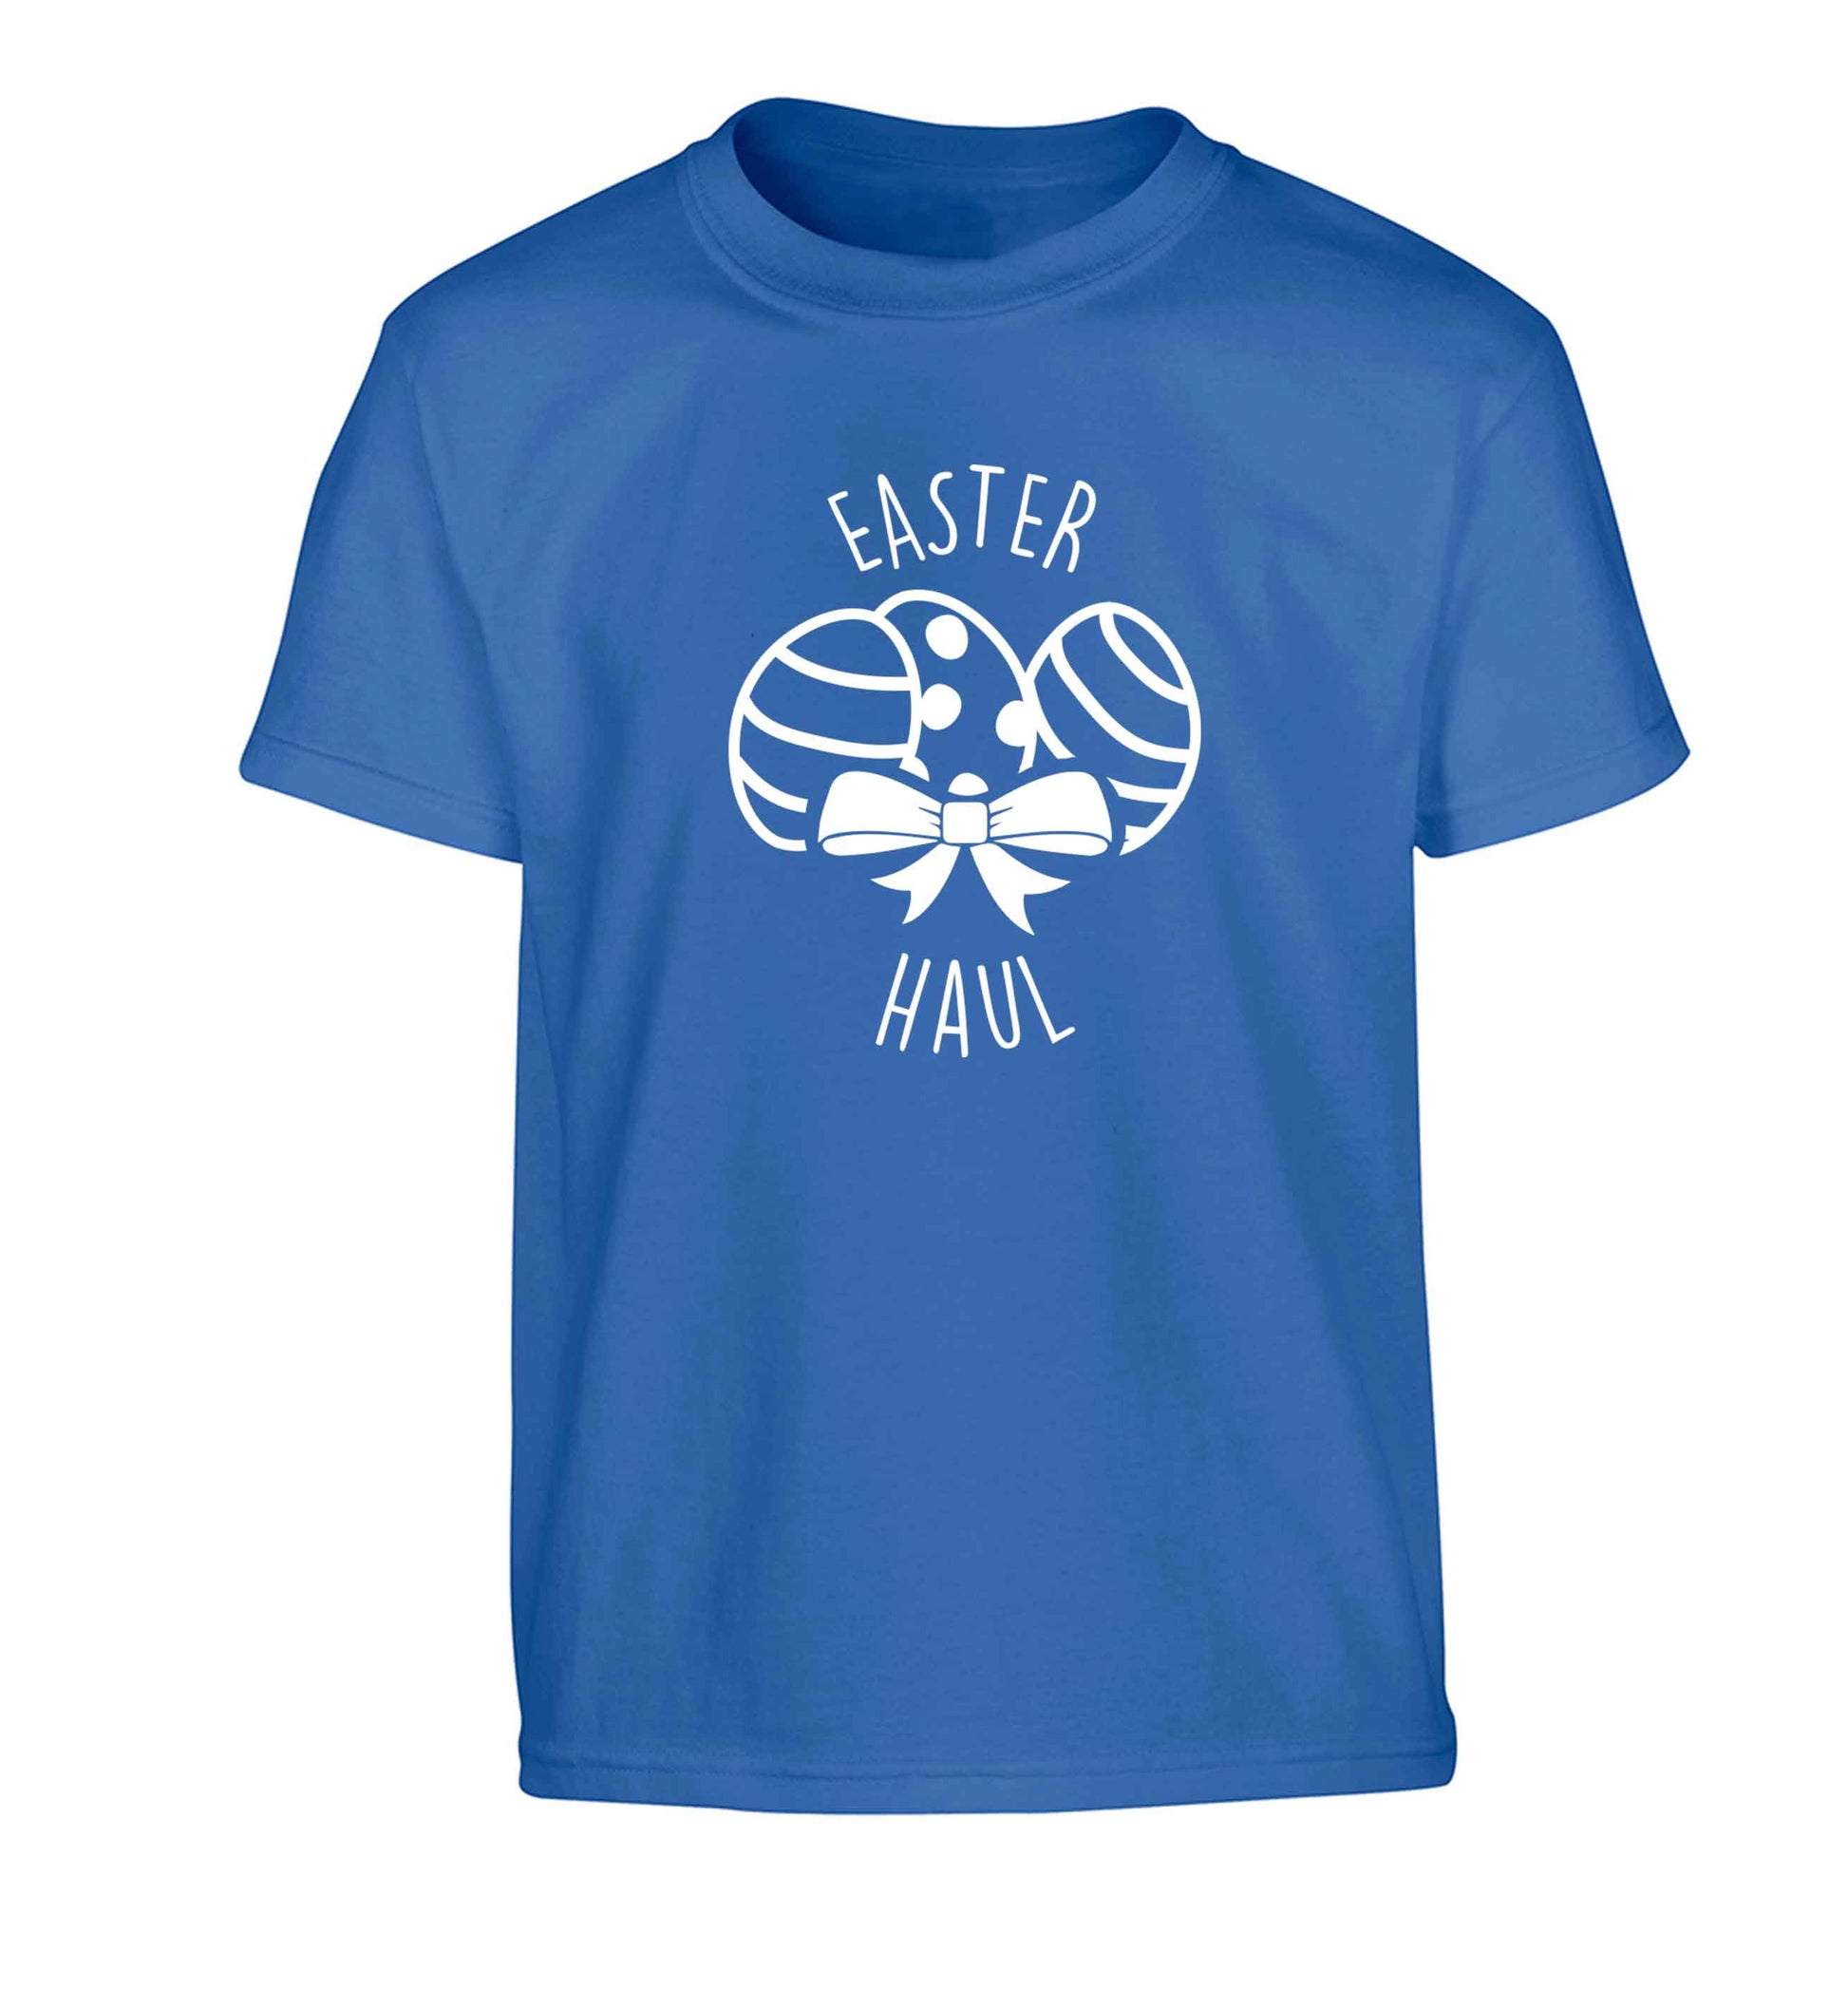 Easter haul Children's blue Tshirt 12-13 Years